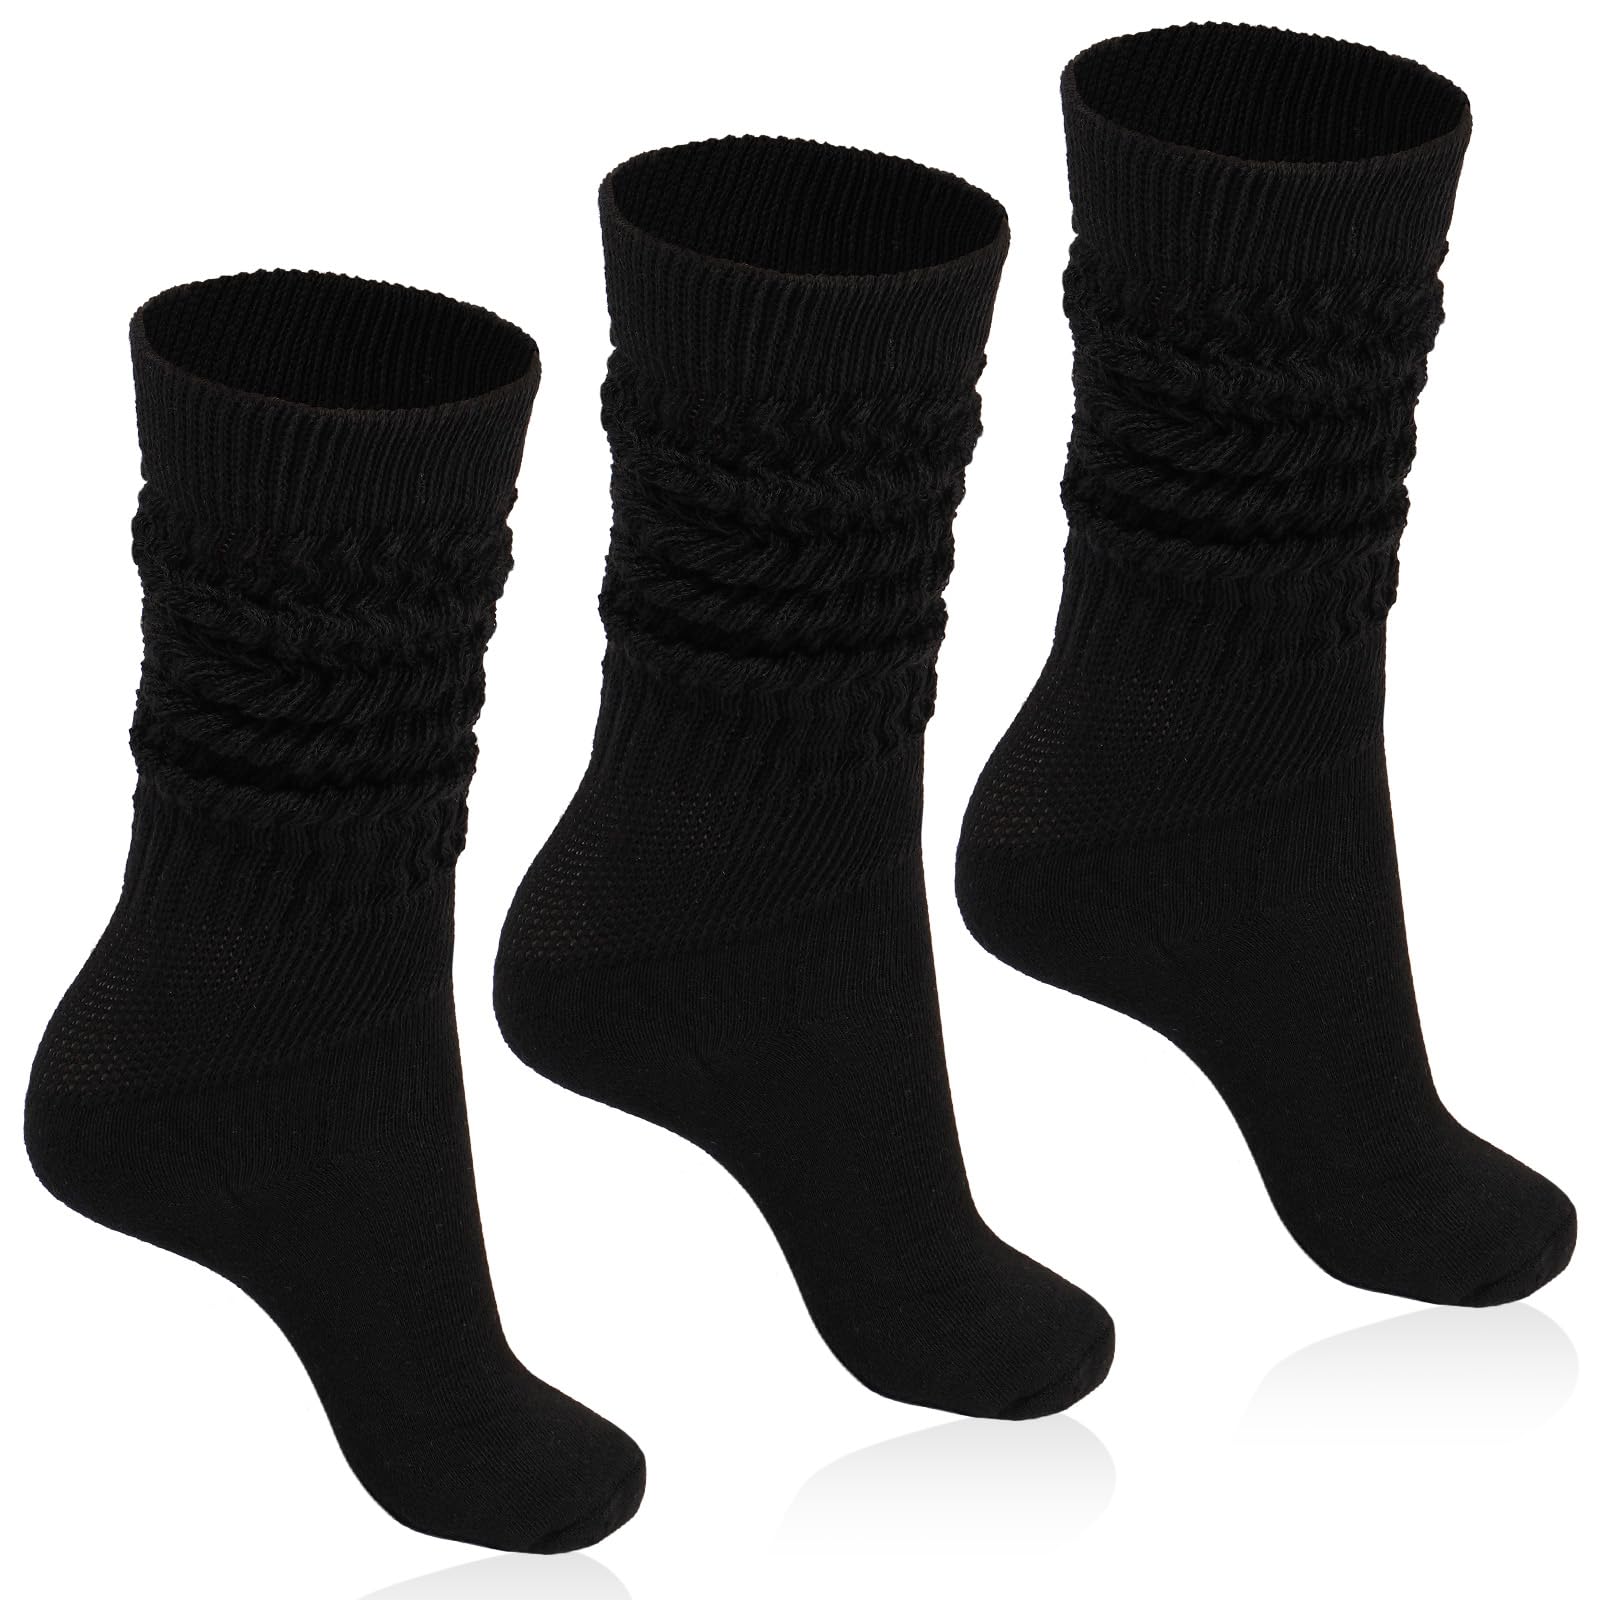 3 Pairs Cotton Knee High Slouch Socks - Black - Moon Wood